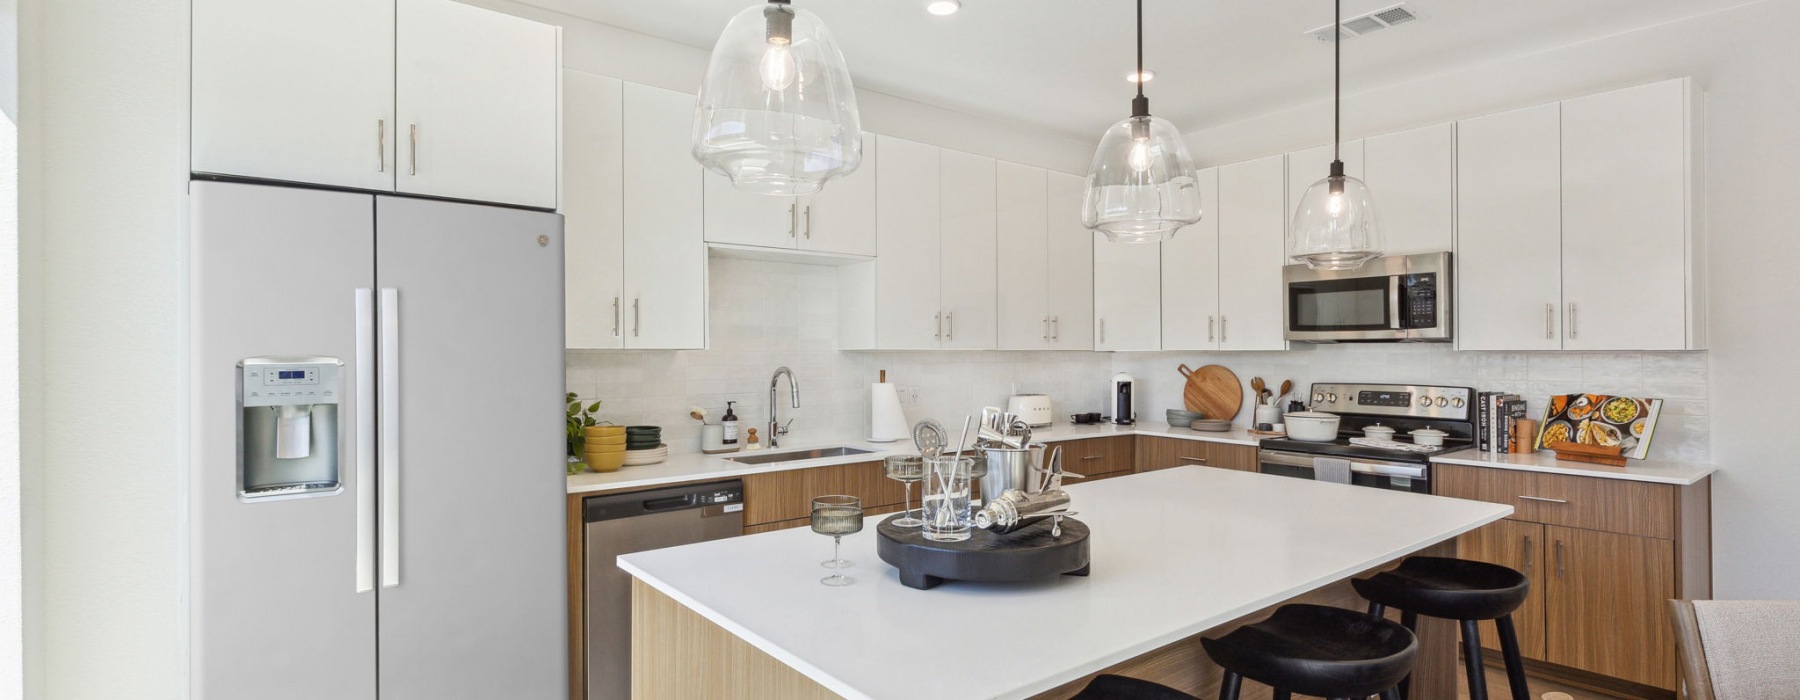 designer kitchen featuring quartz counters and soft close cabinets